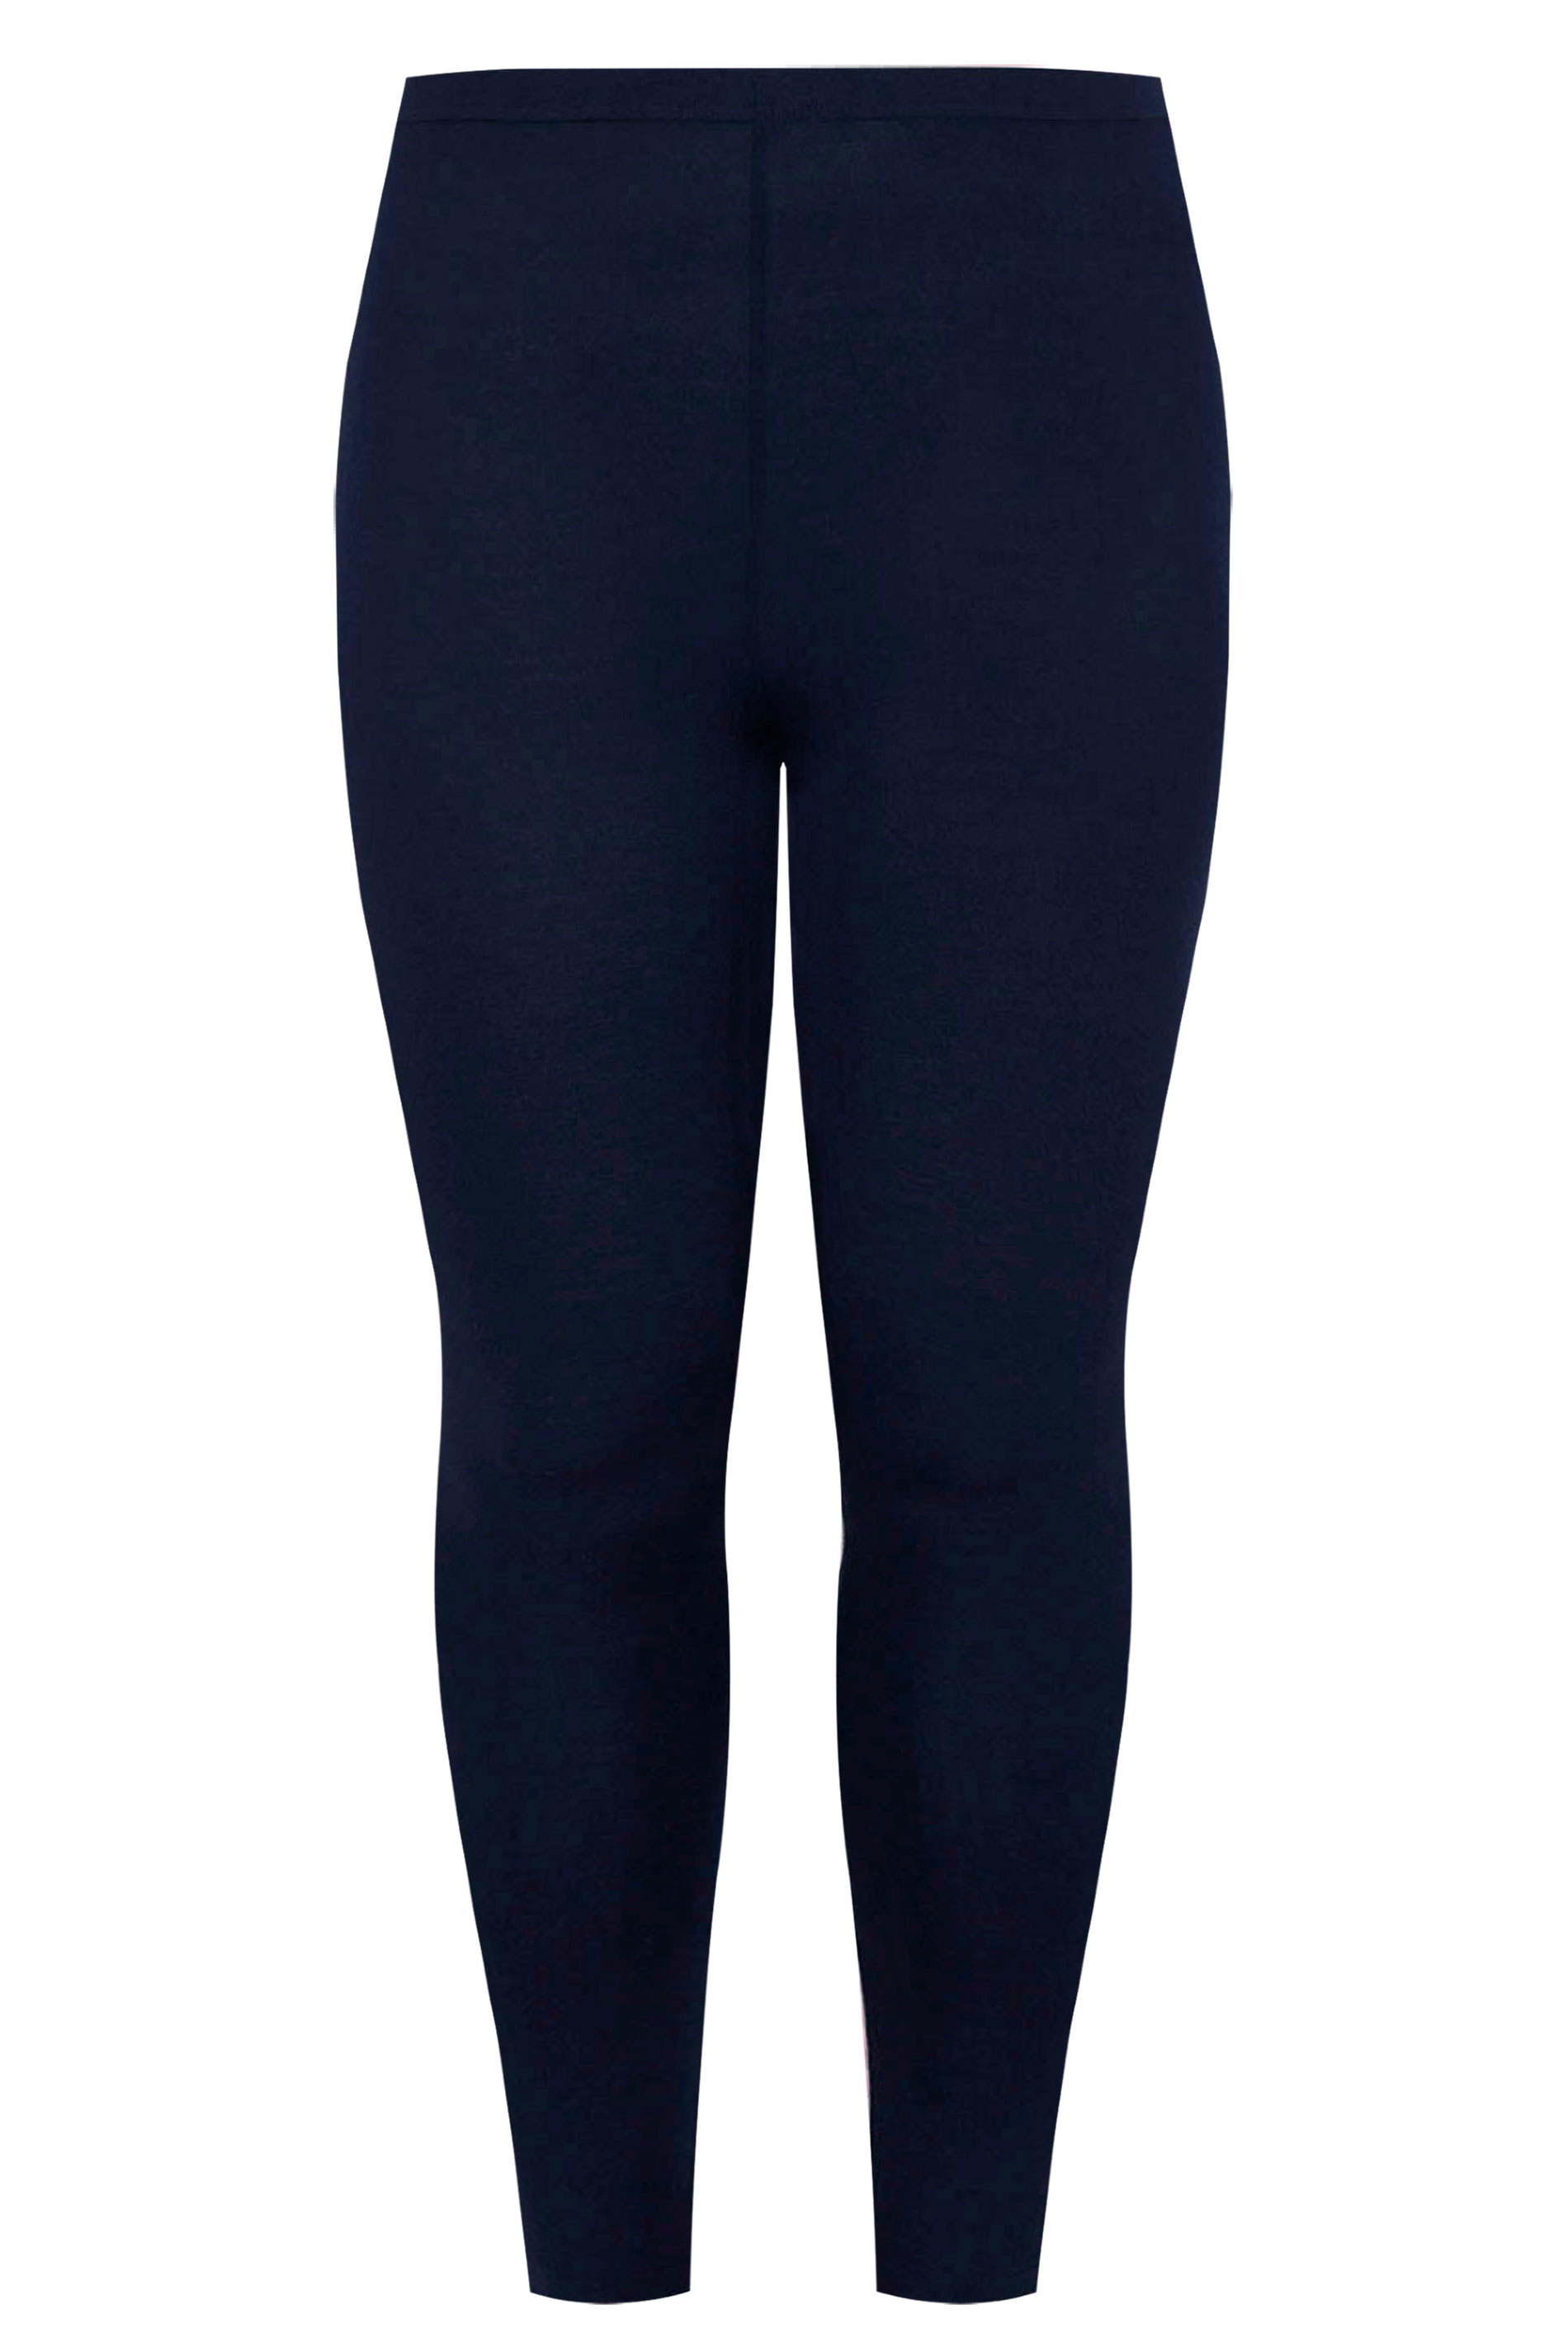 Plus Size Navy Blue Cotton Leggings Yours | Clothing